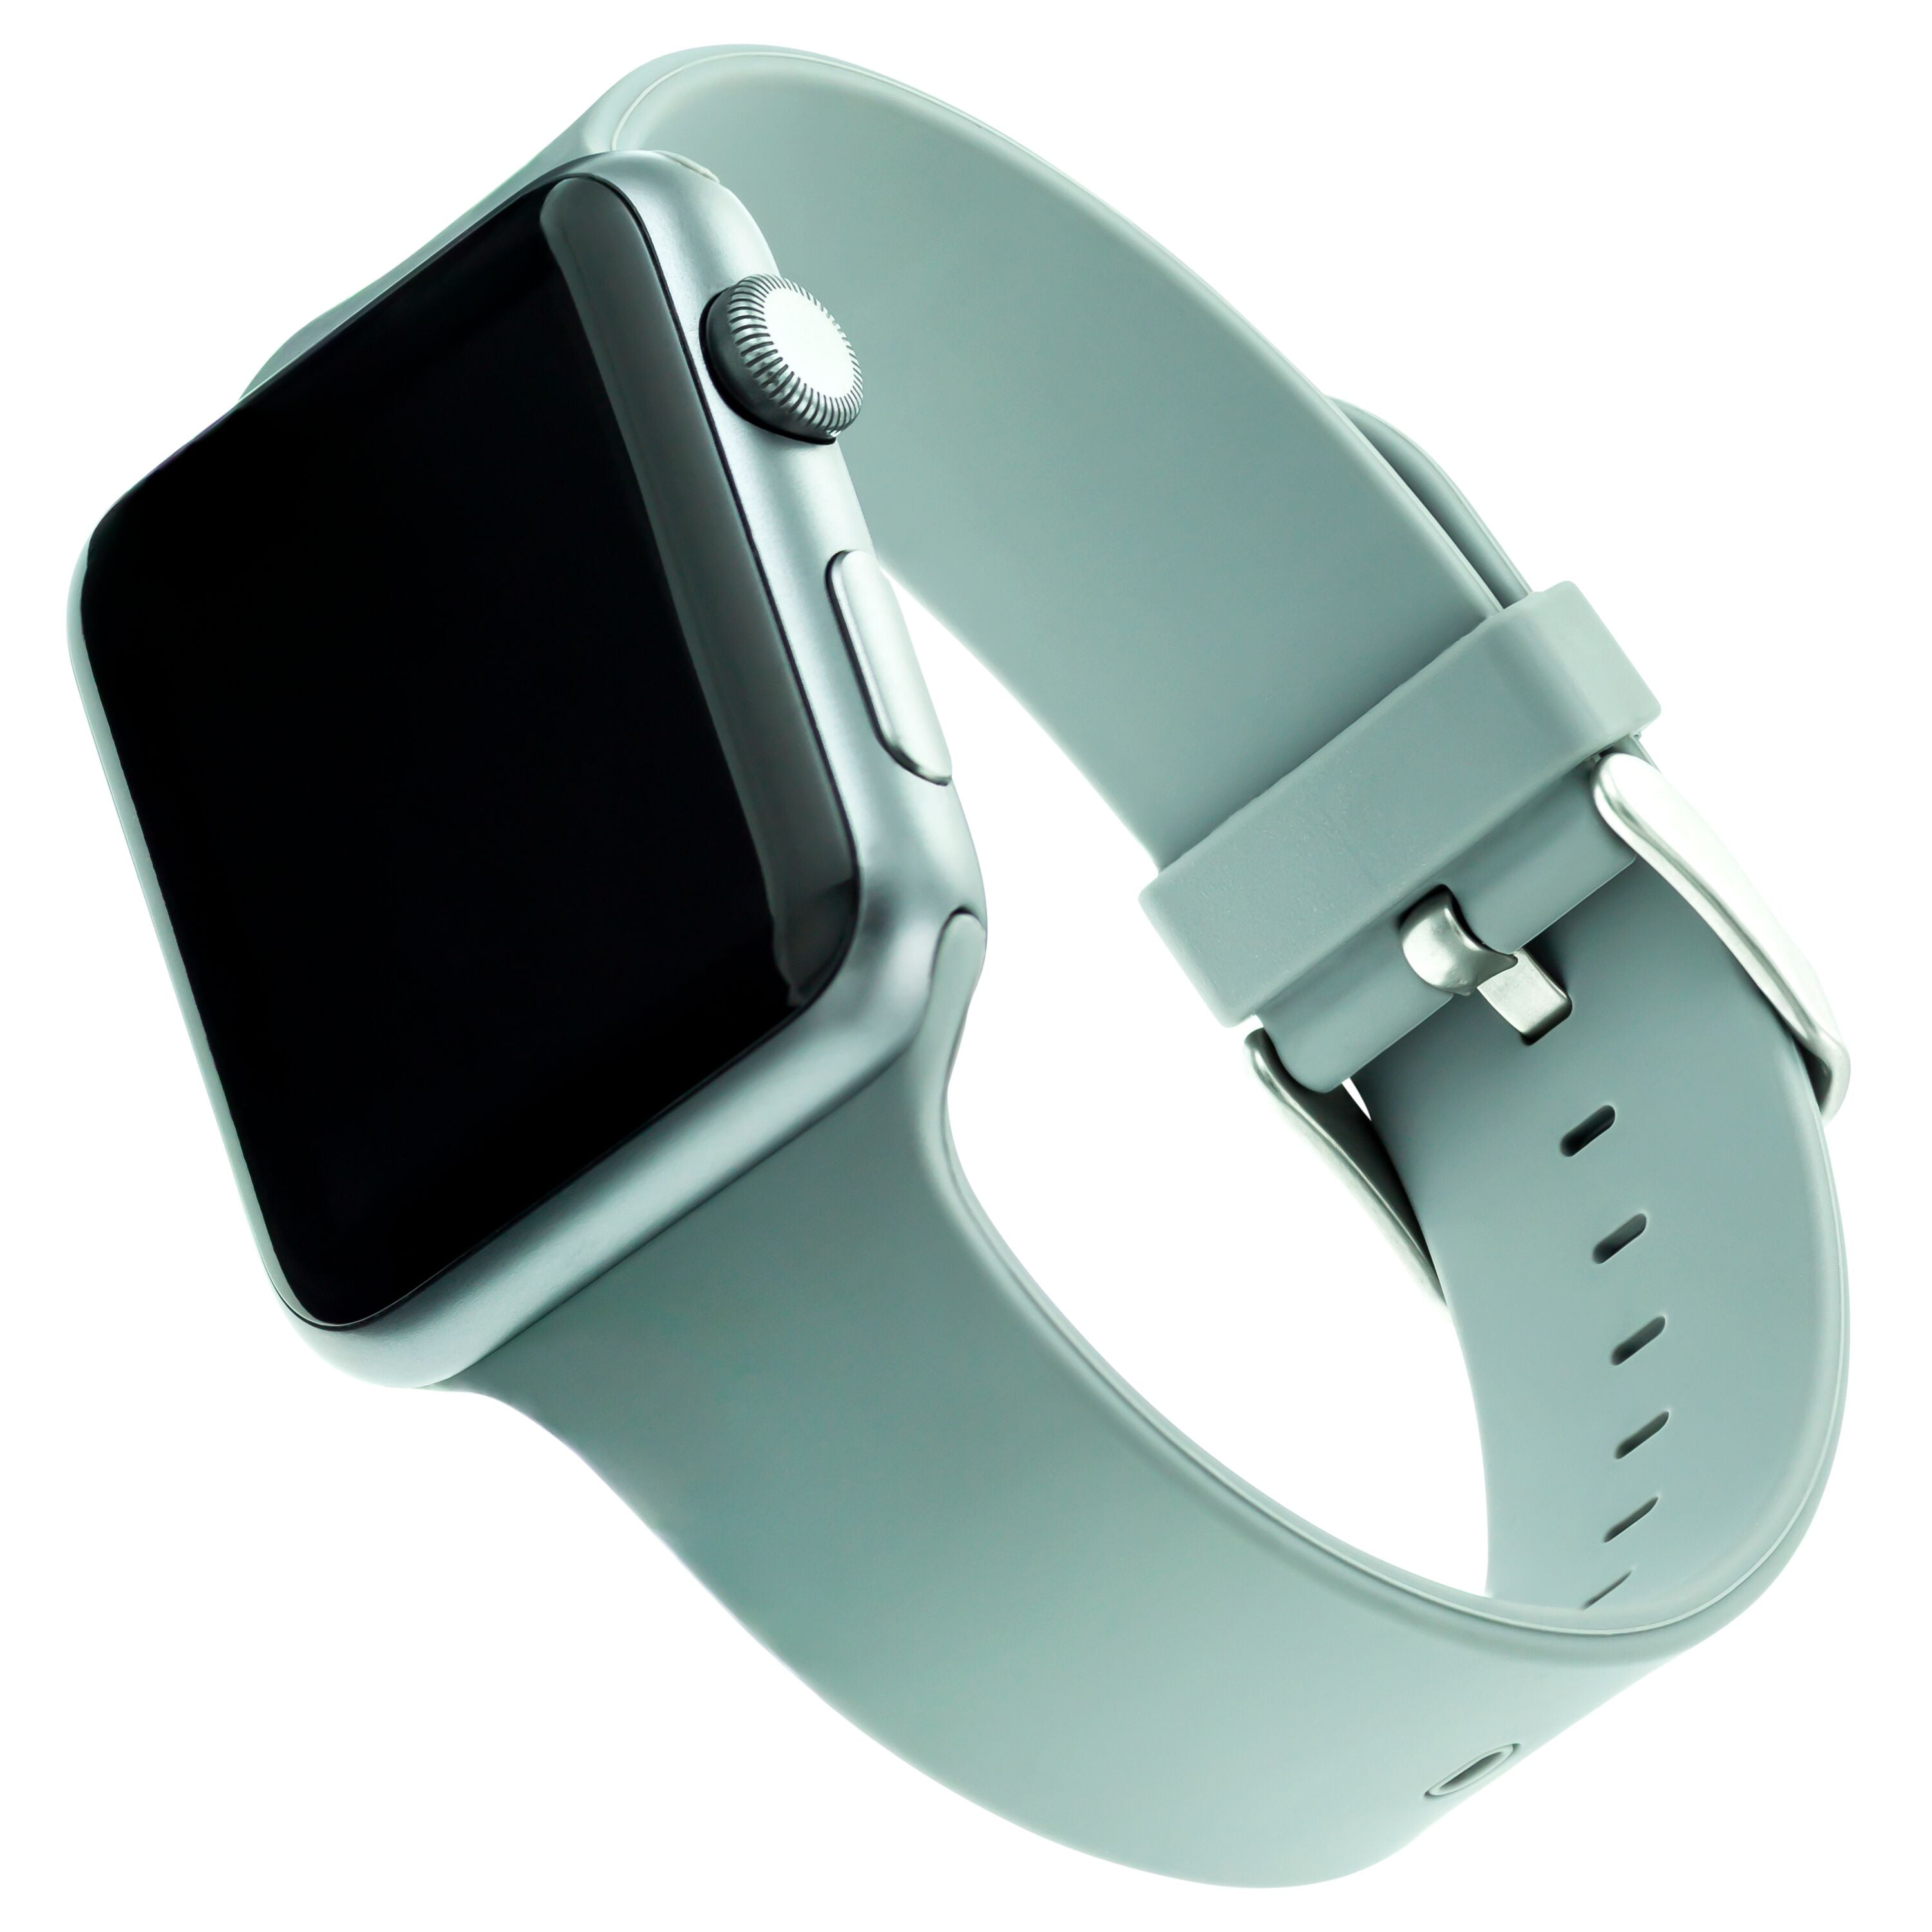 Apple Watch Bands 42/44mm